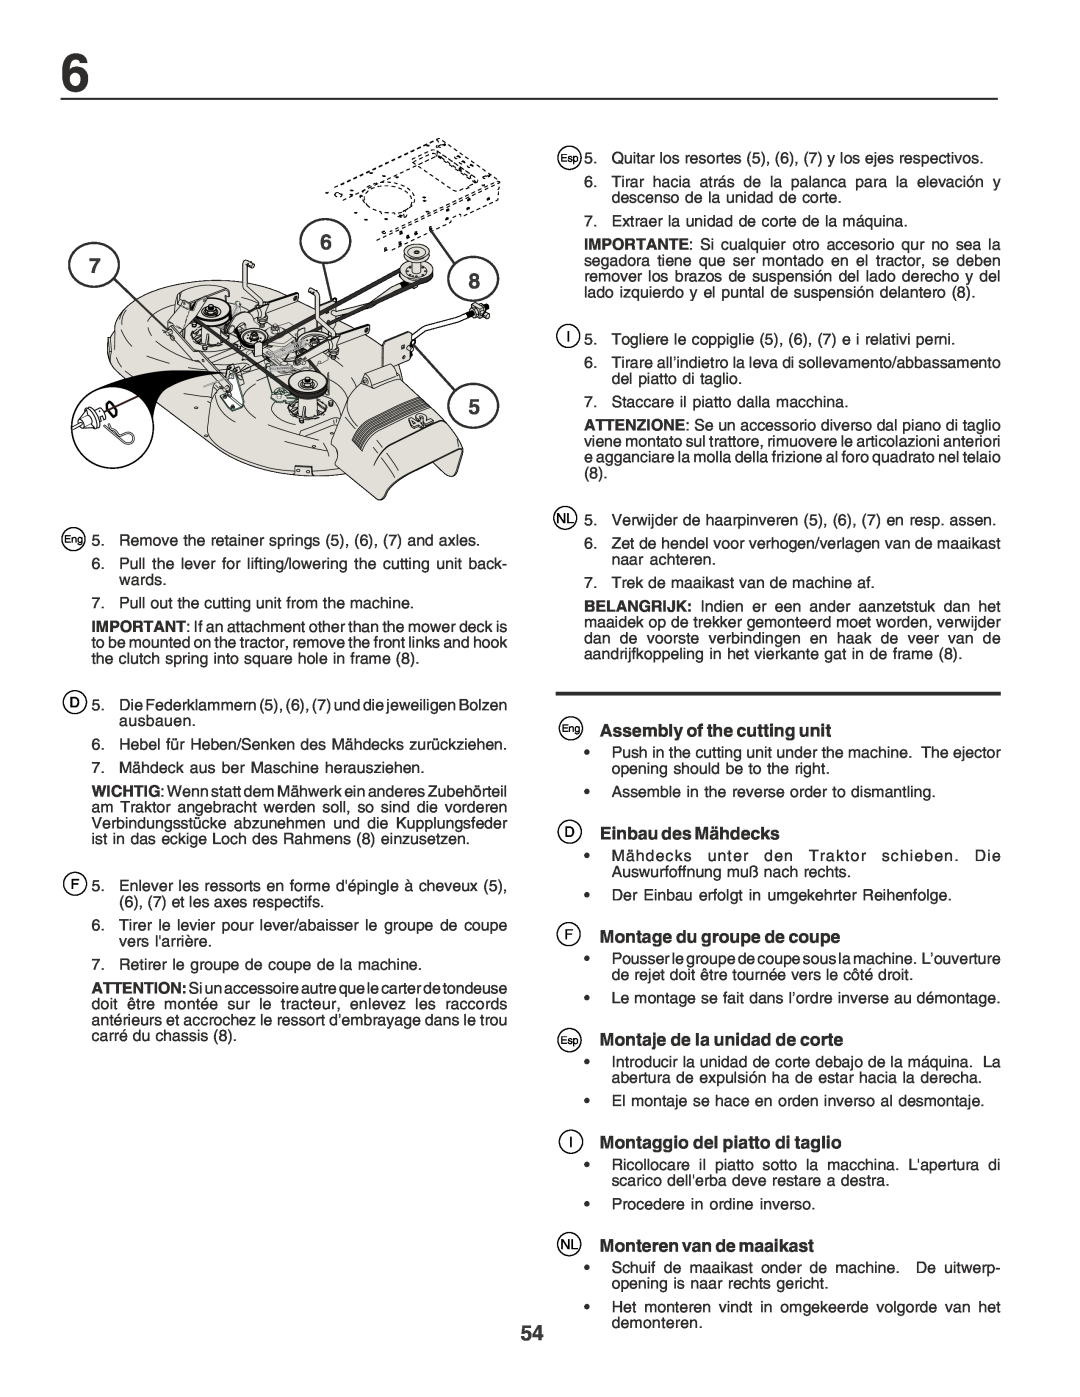 Husqvarna YT155 instruction manual Assembly of the cutting unit, Einbau des Mähdecks, F Montage du groupe de coupe 